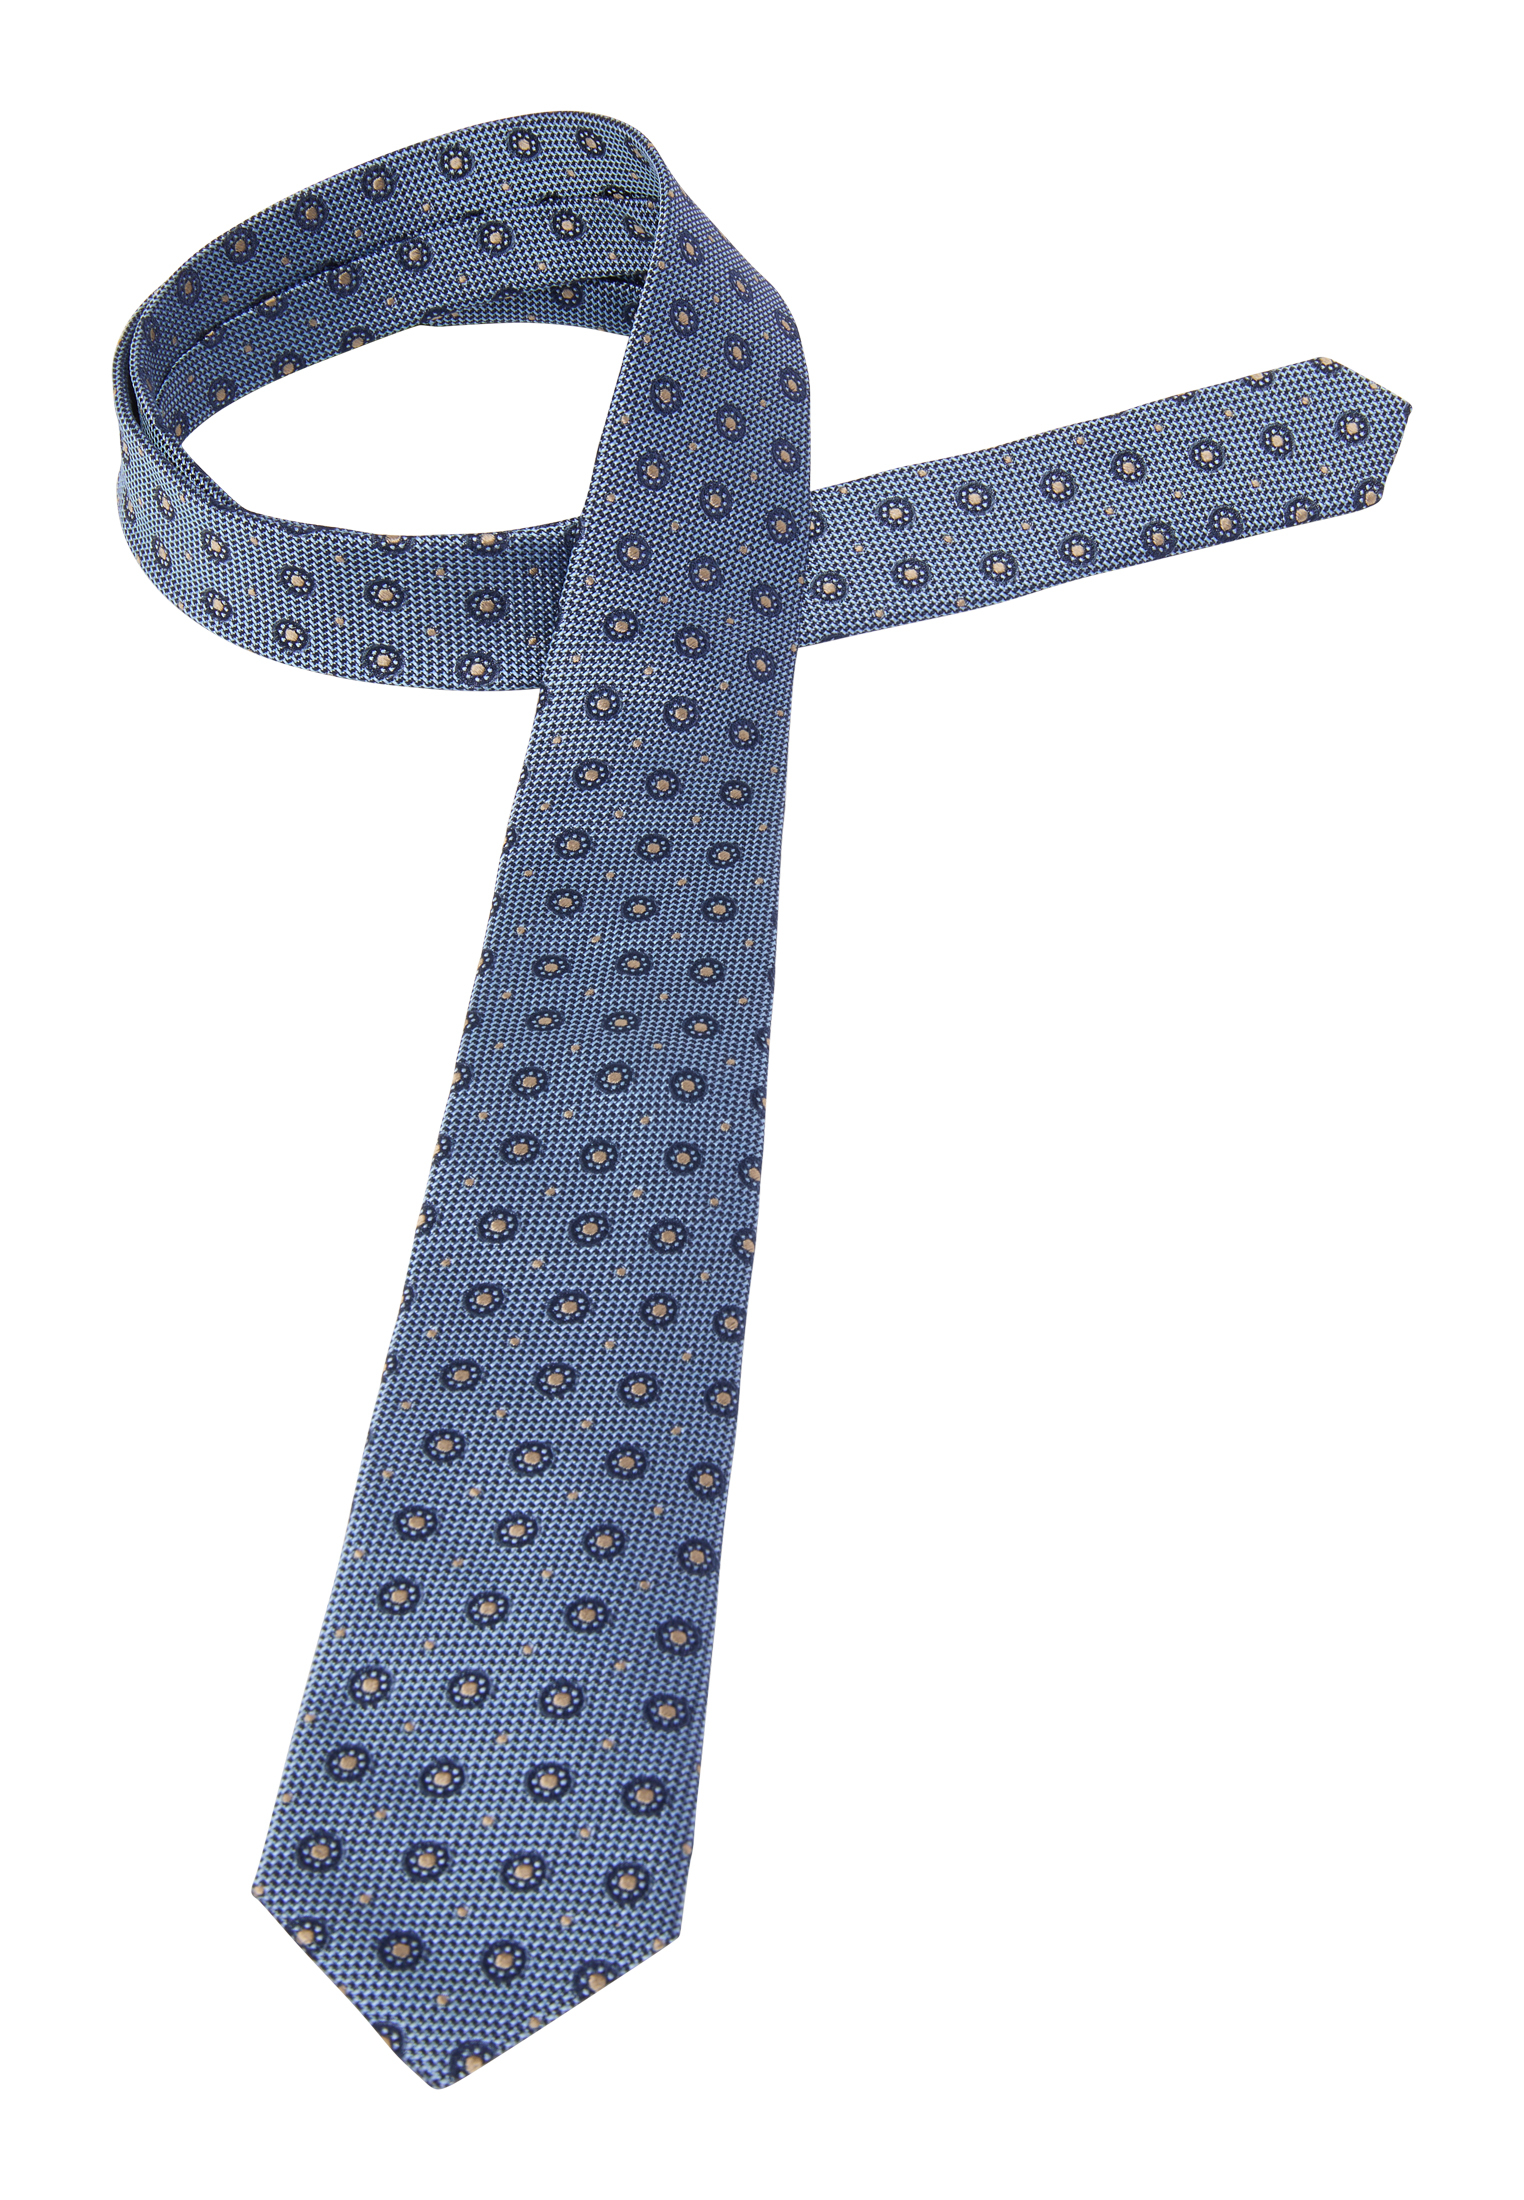 blau blau 1AC02041-01-41-142 in | Krawatte | | 142 strukturiert